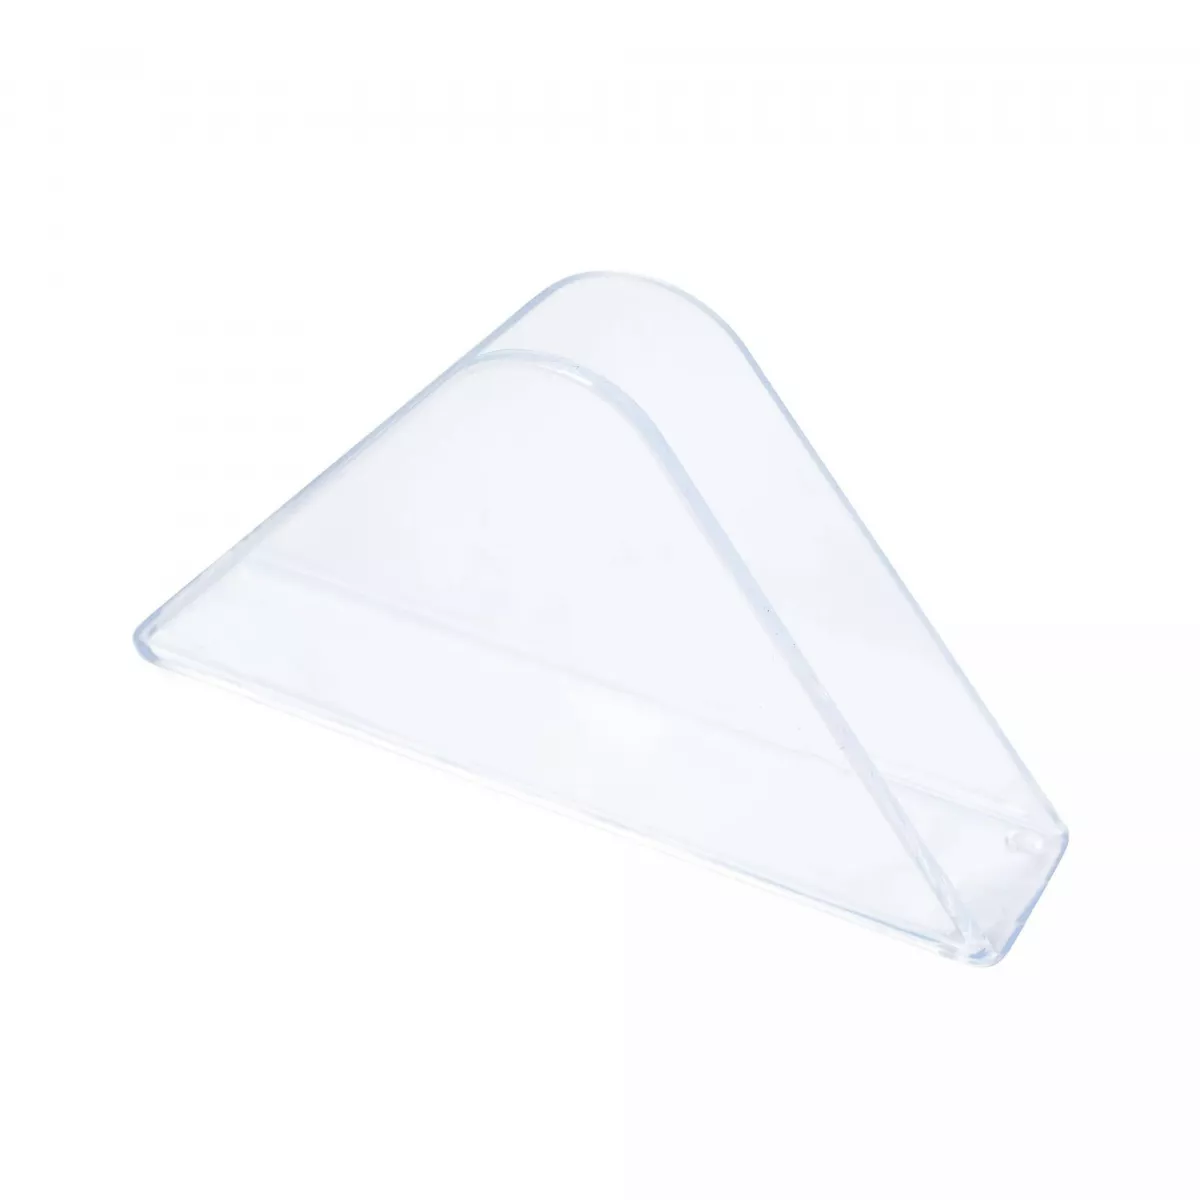 Suport servetele, din plastic, 14 x 7.5 cm, transparent